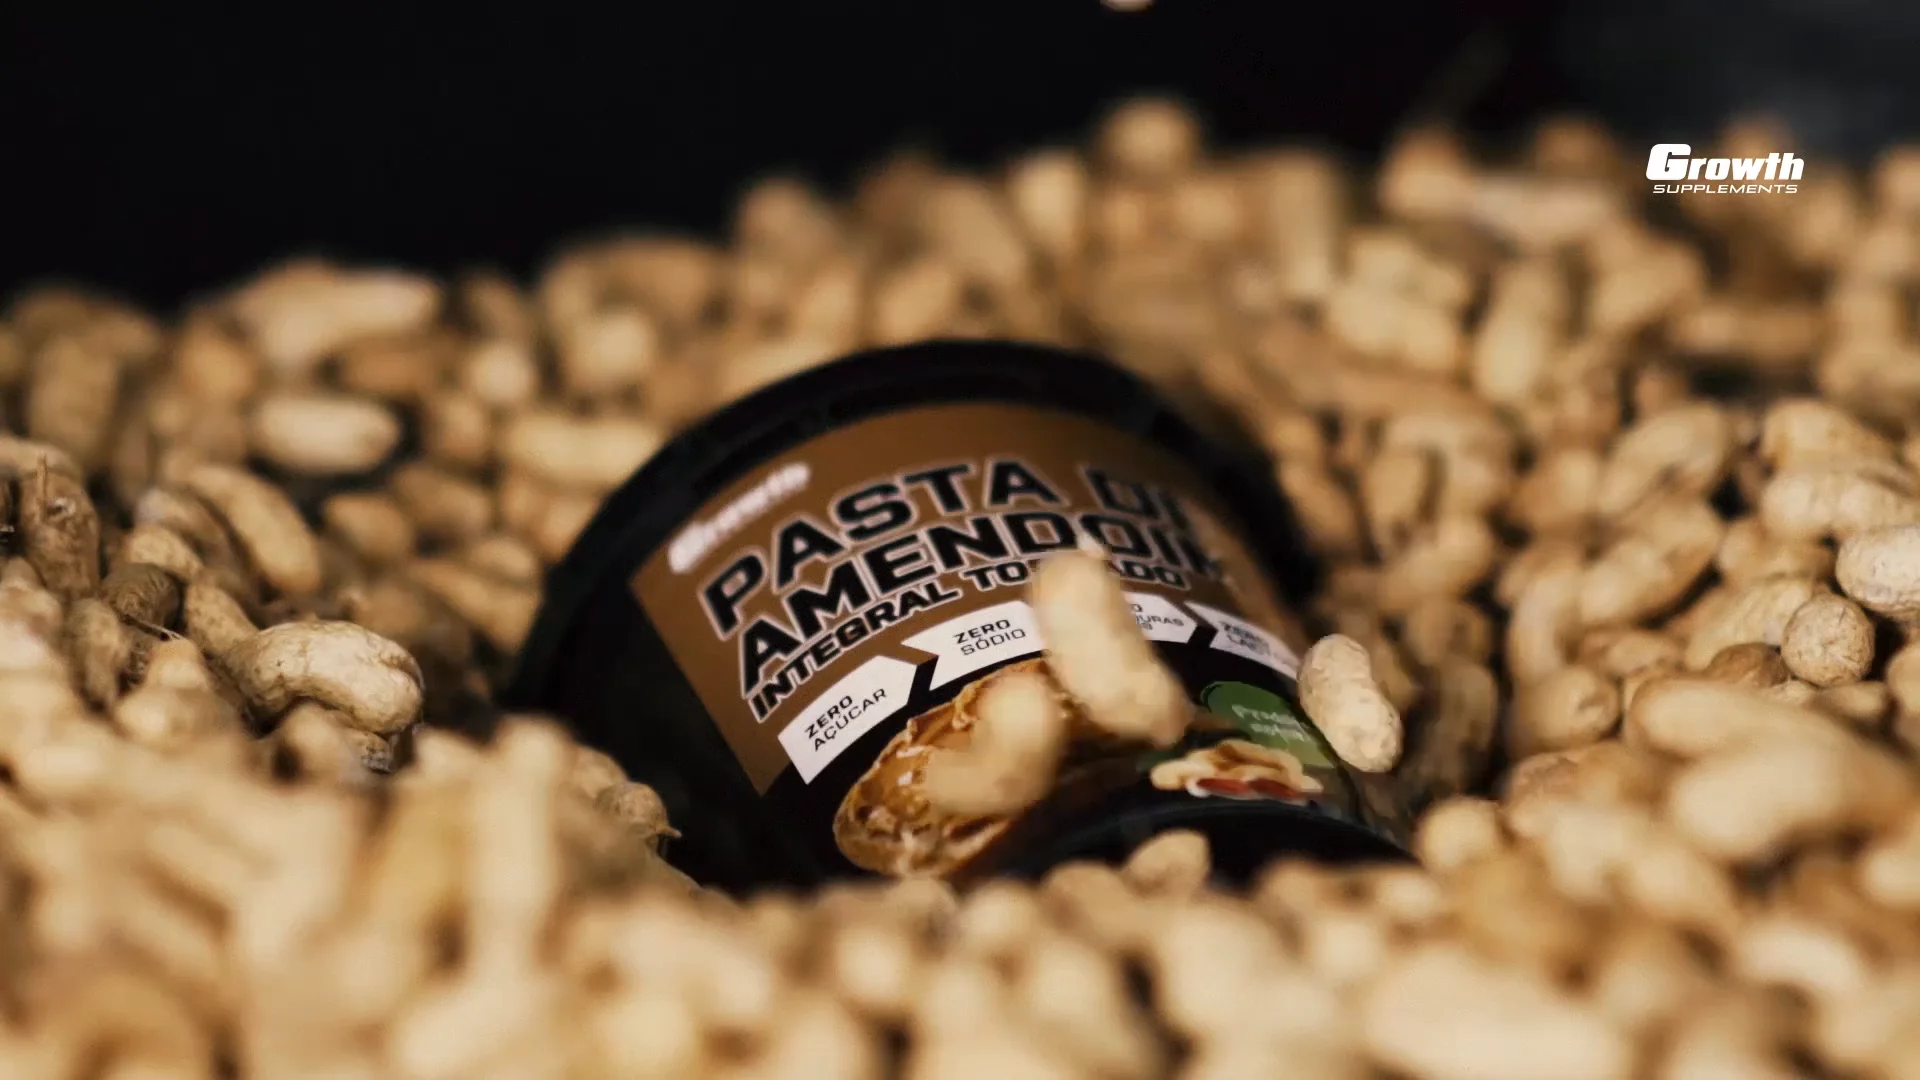 Lançamento Pasta de Amendoim _ Growth on Vimeo